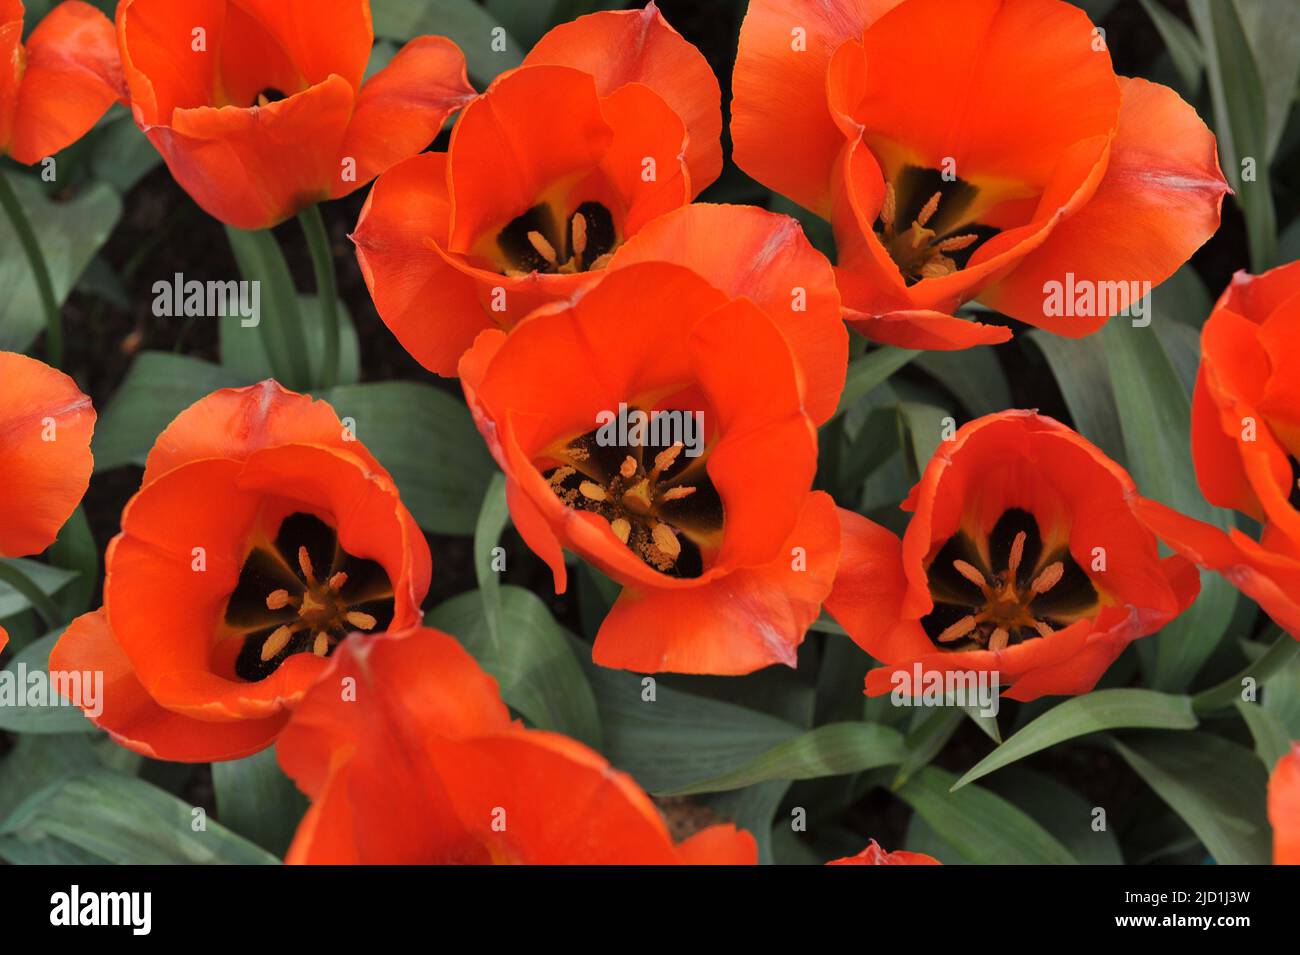 Greigii tulips (Tulipa) Orange Elite bloom in a garden in April Stock Photo